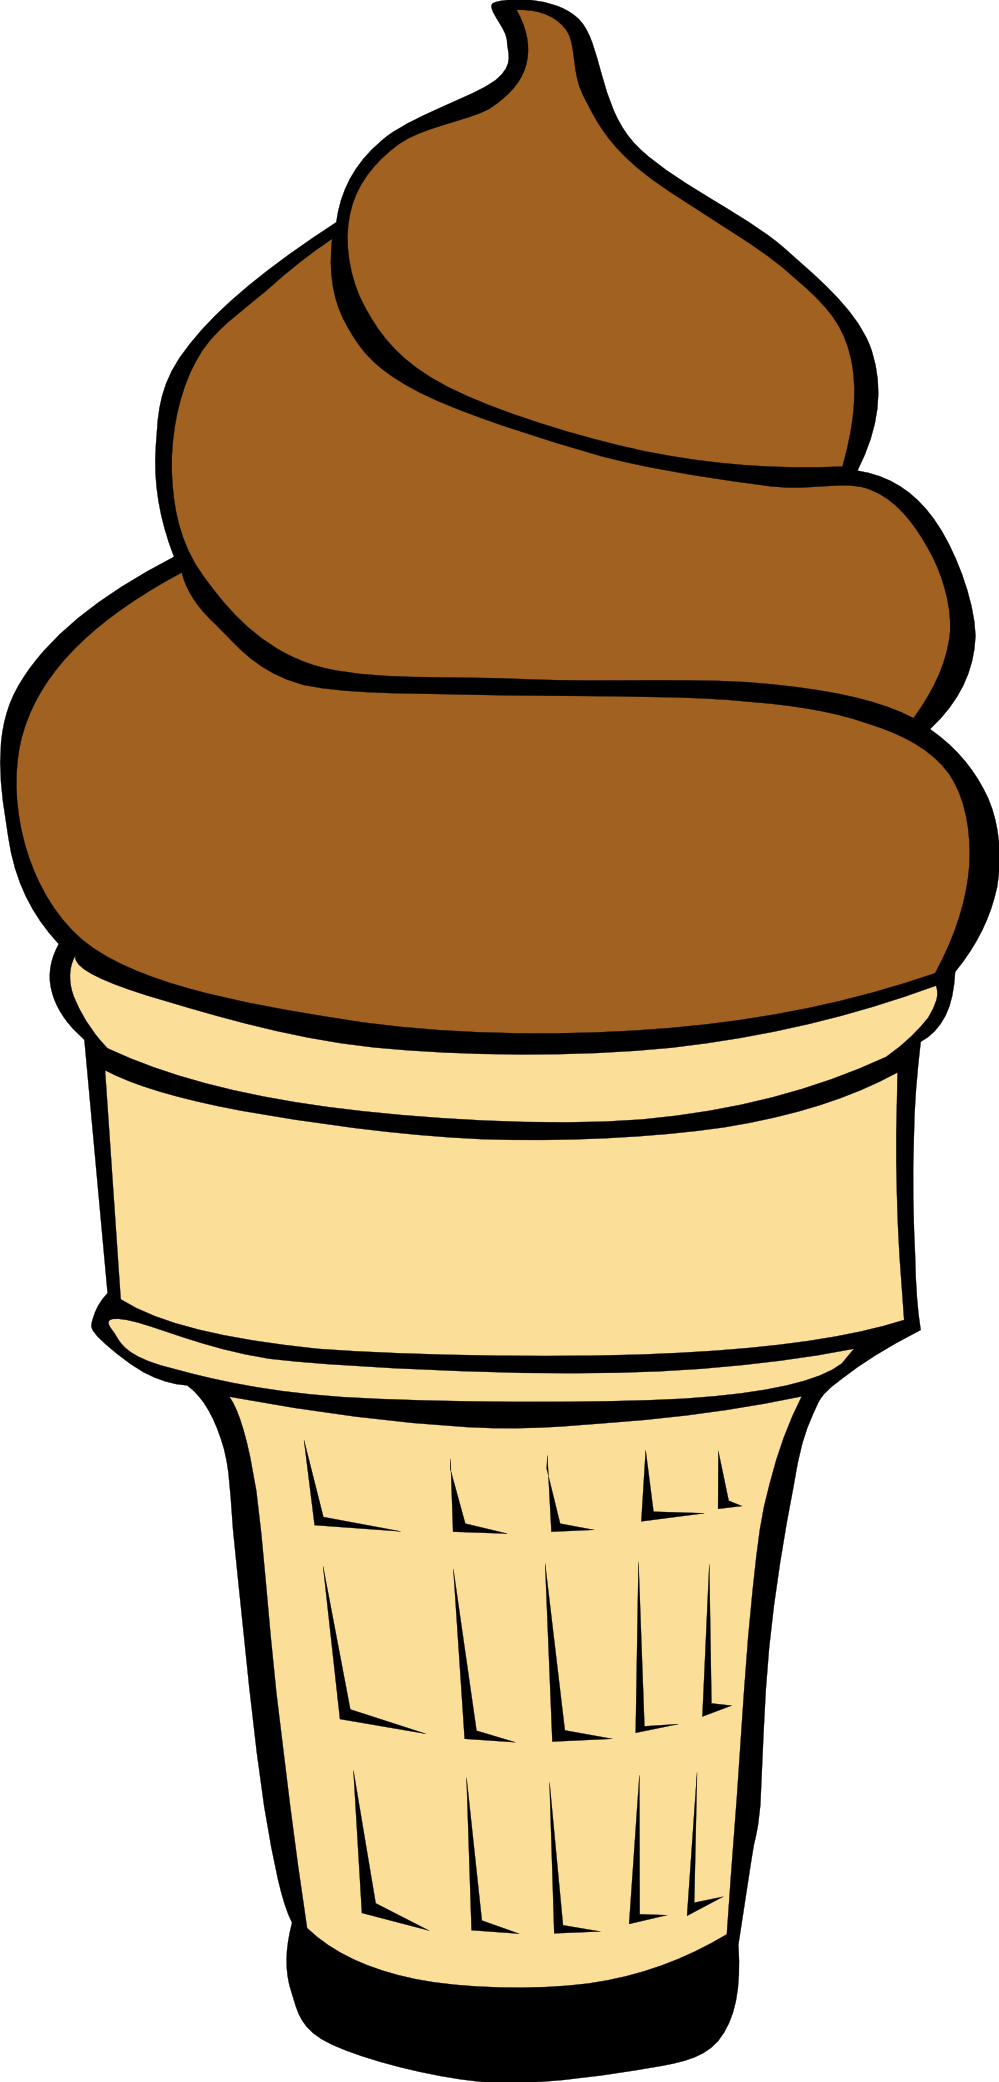 Empty Ice Cream Cone Clip Art - Free Clipart Images